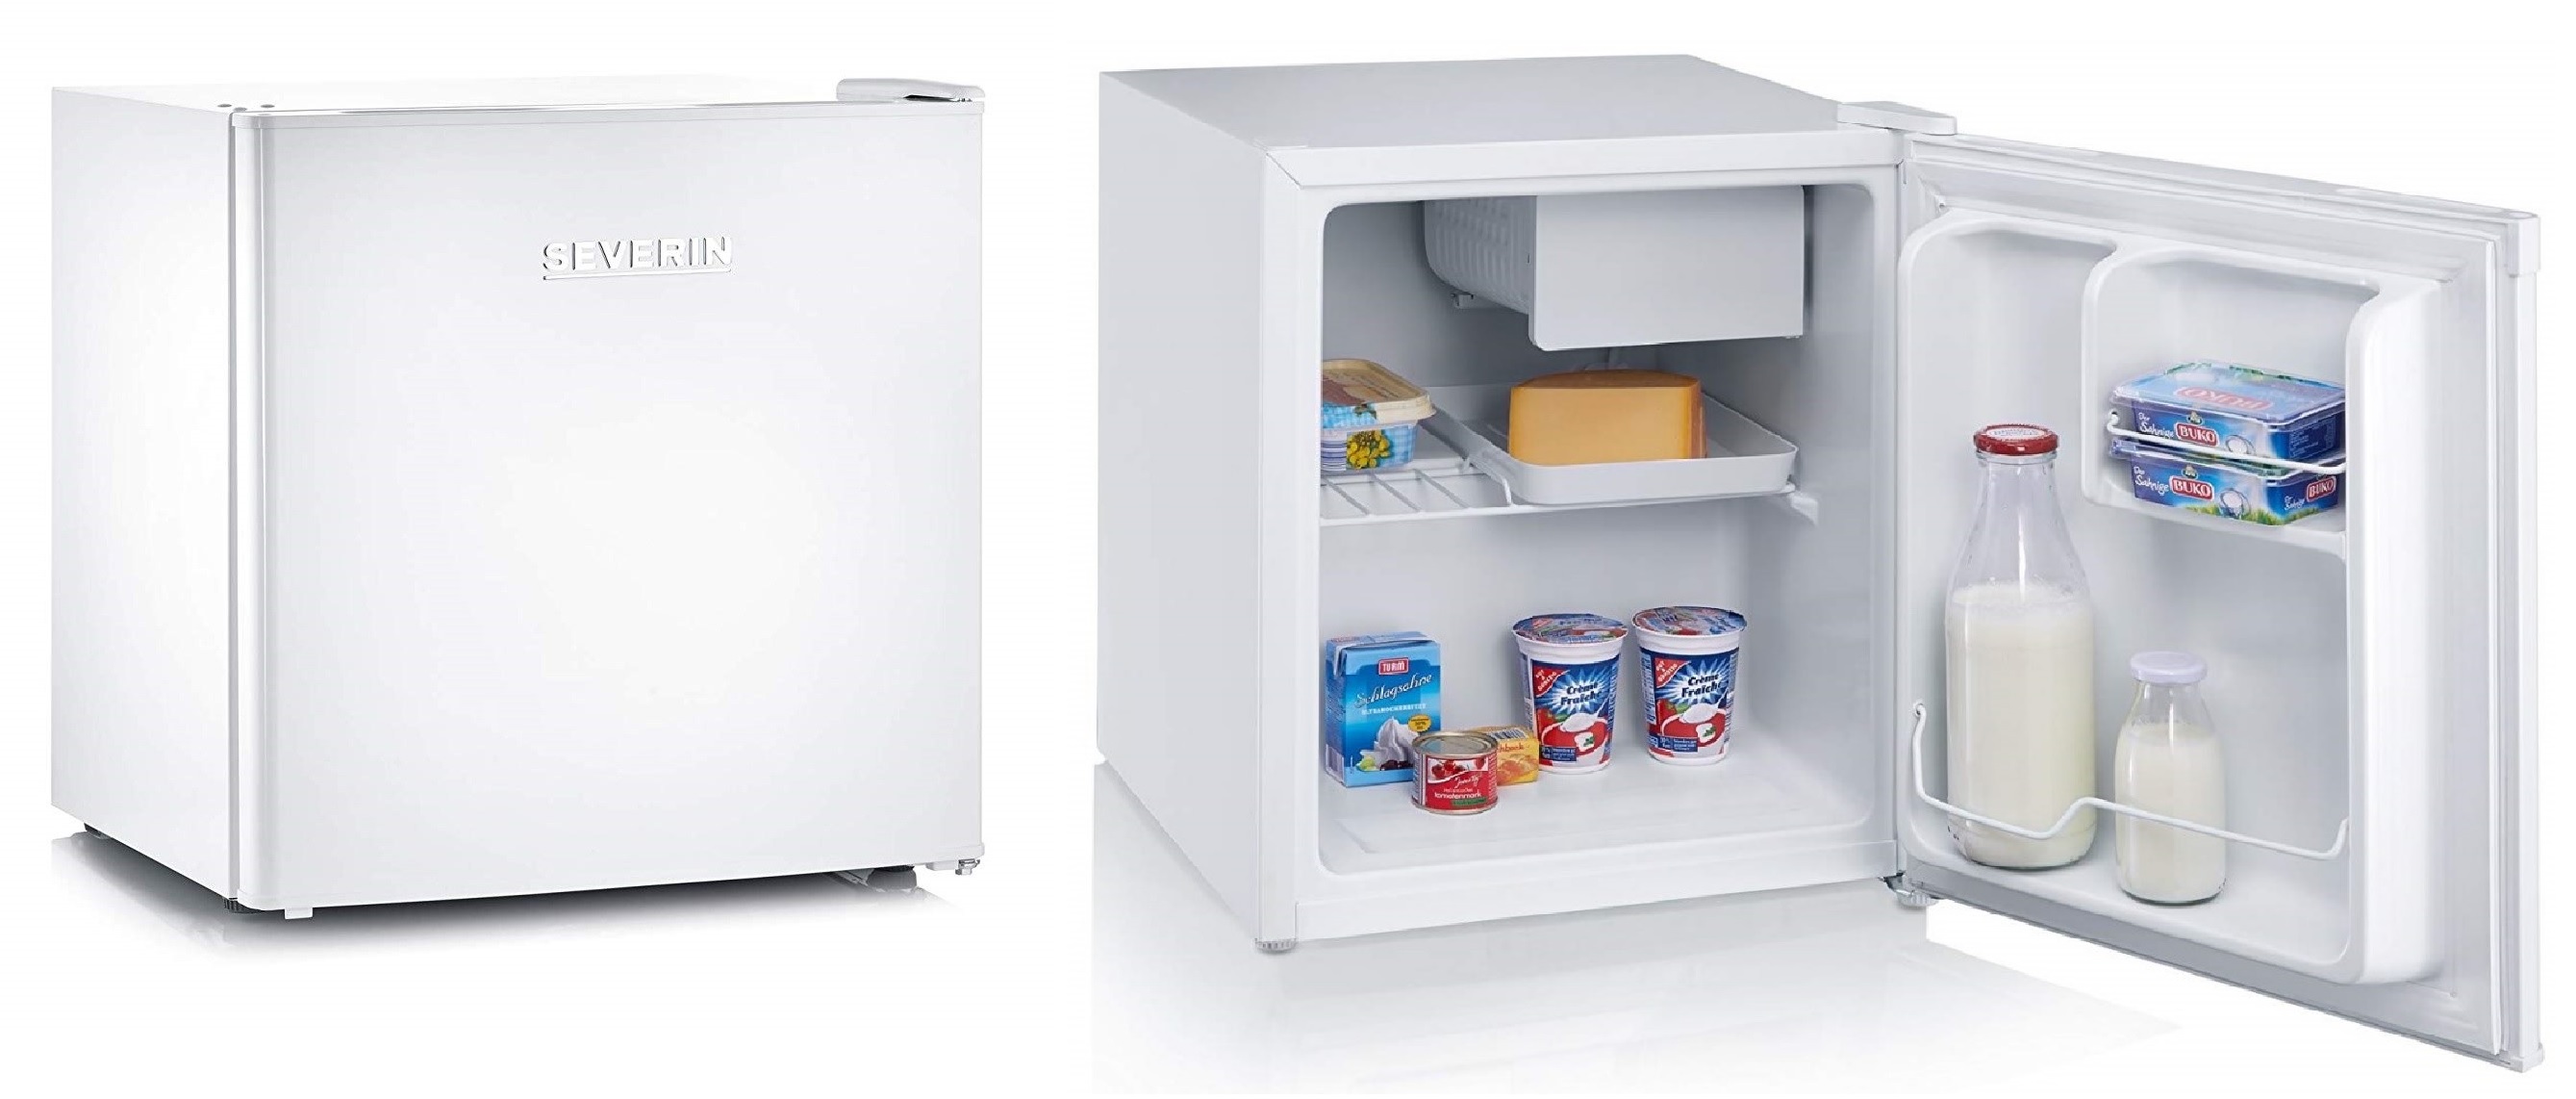 frigorificos pequeños con congelador severin